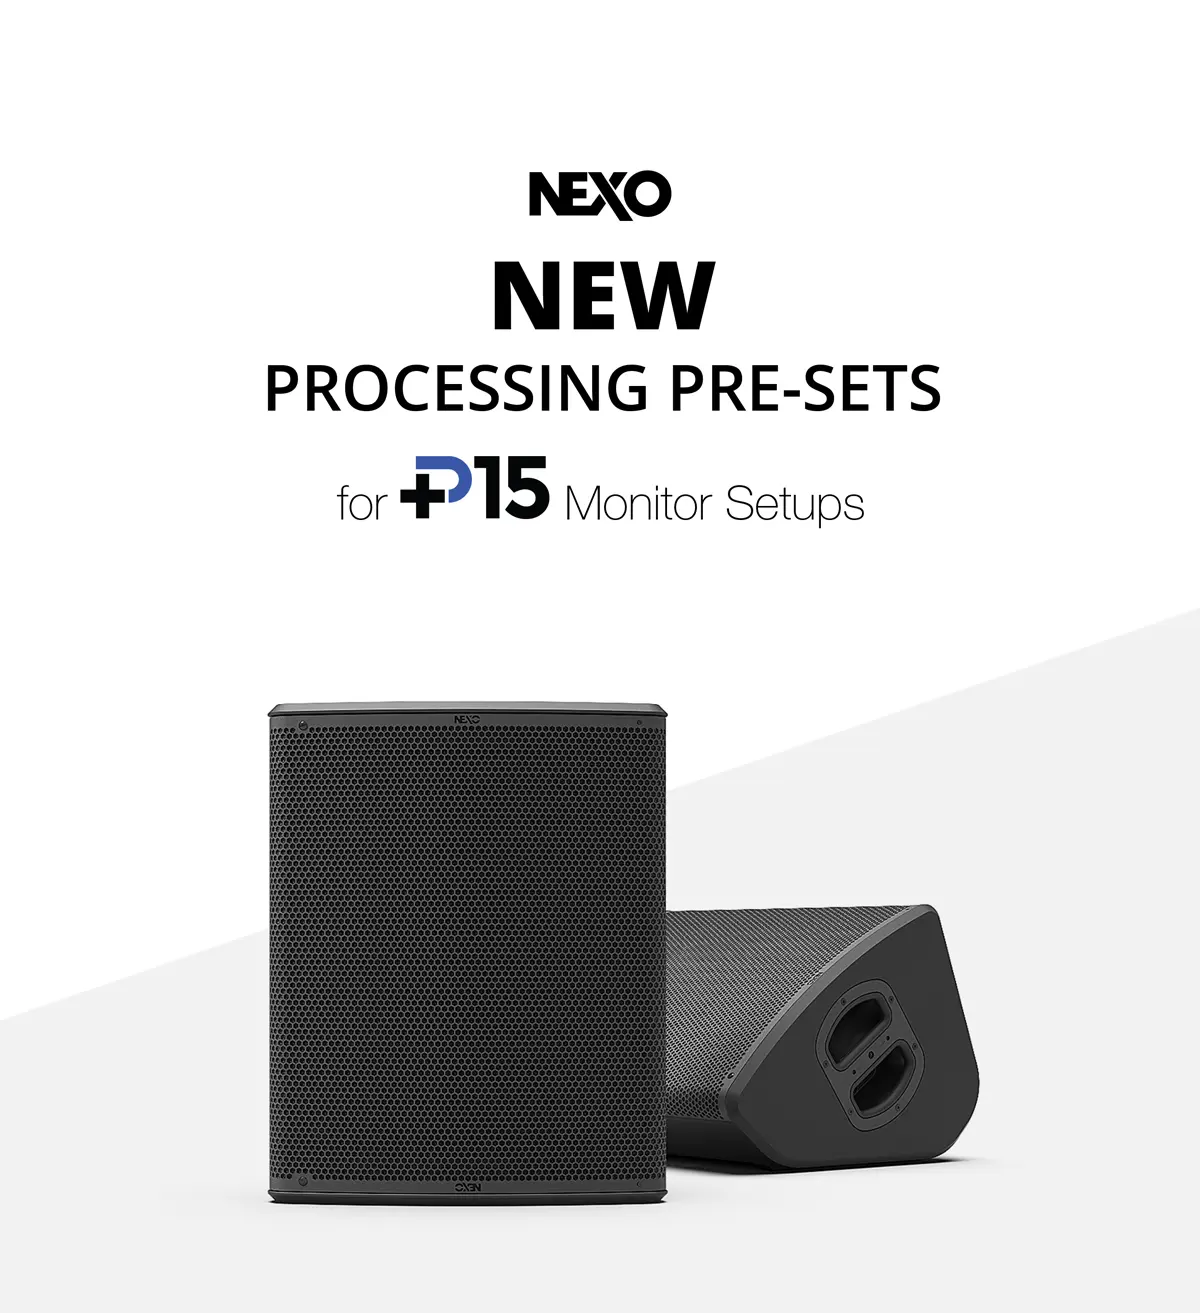 NEXO New Processing Pre-Sets for P15 Monitor Setups